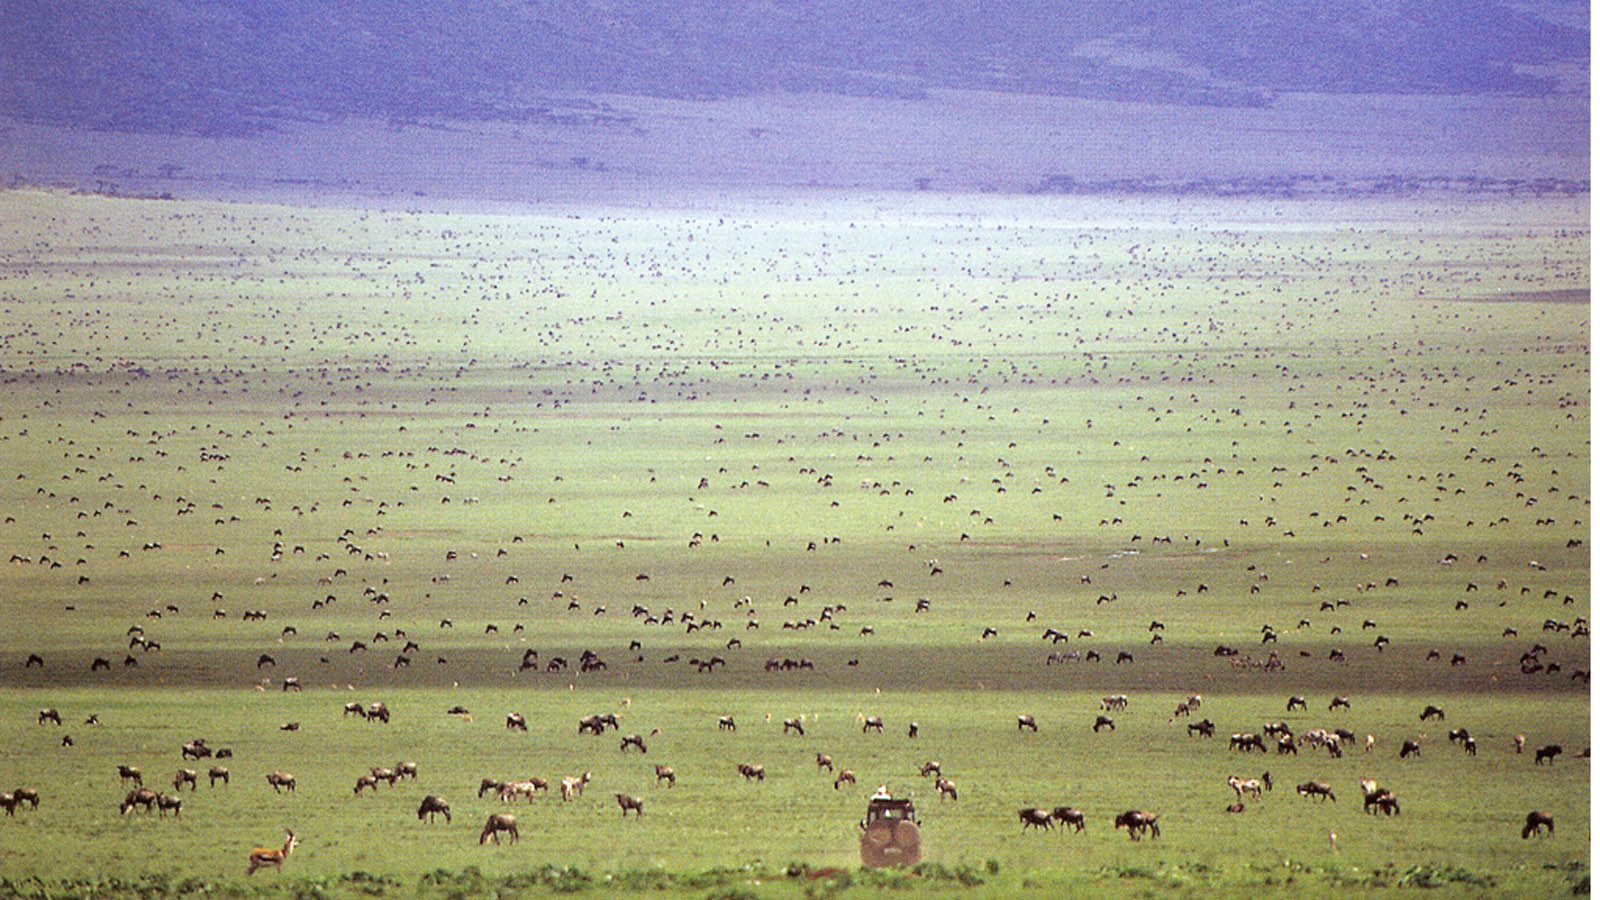 Legendary Serengeti Camp  Mobile Safaris with Tanzania Odyssey